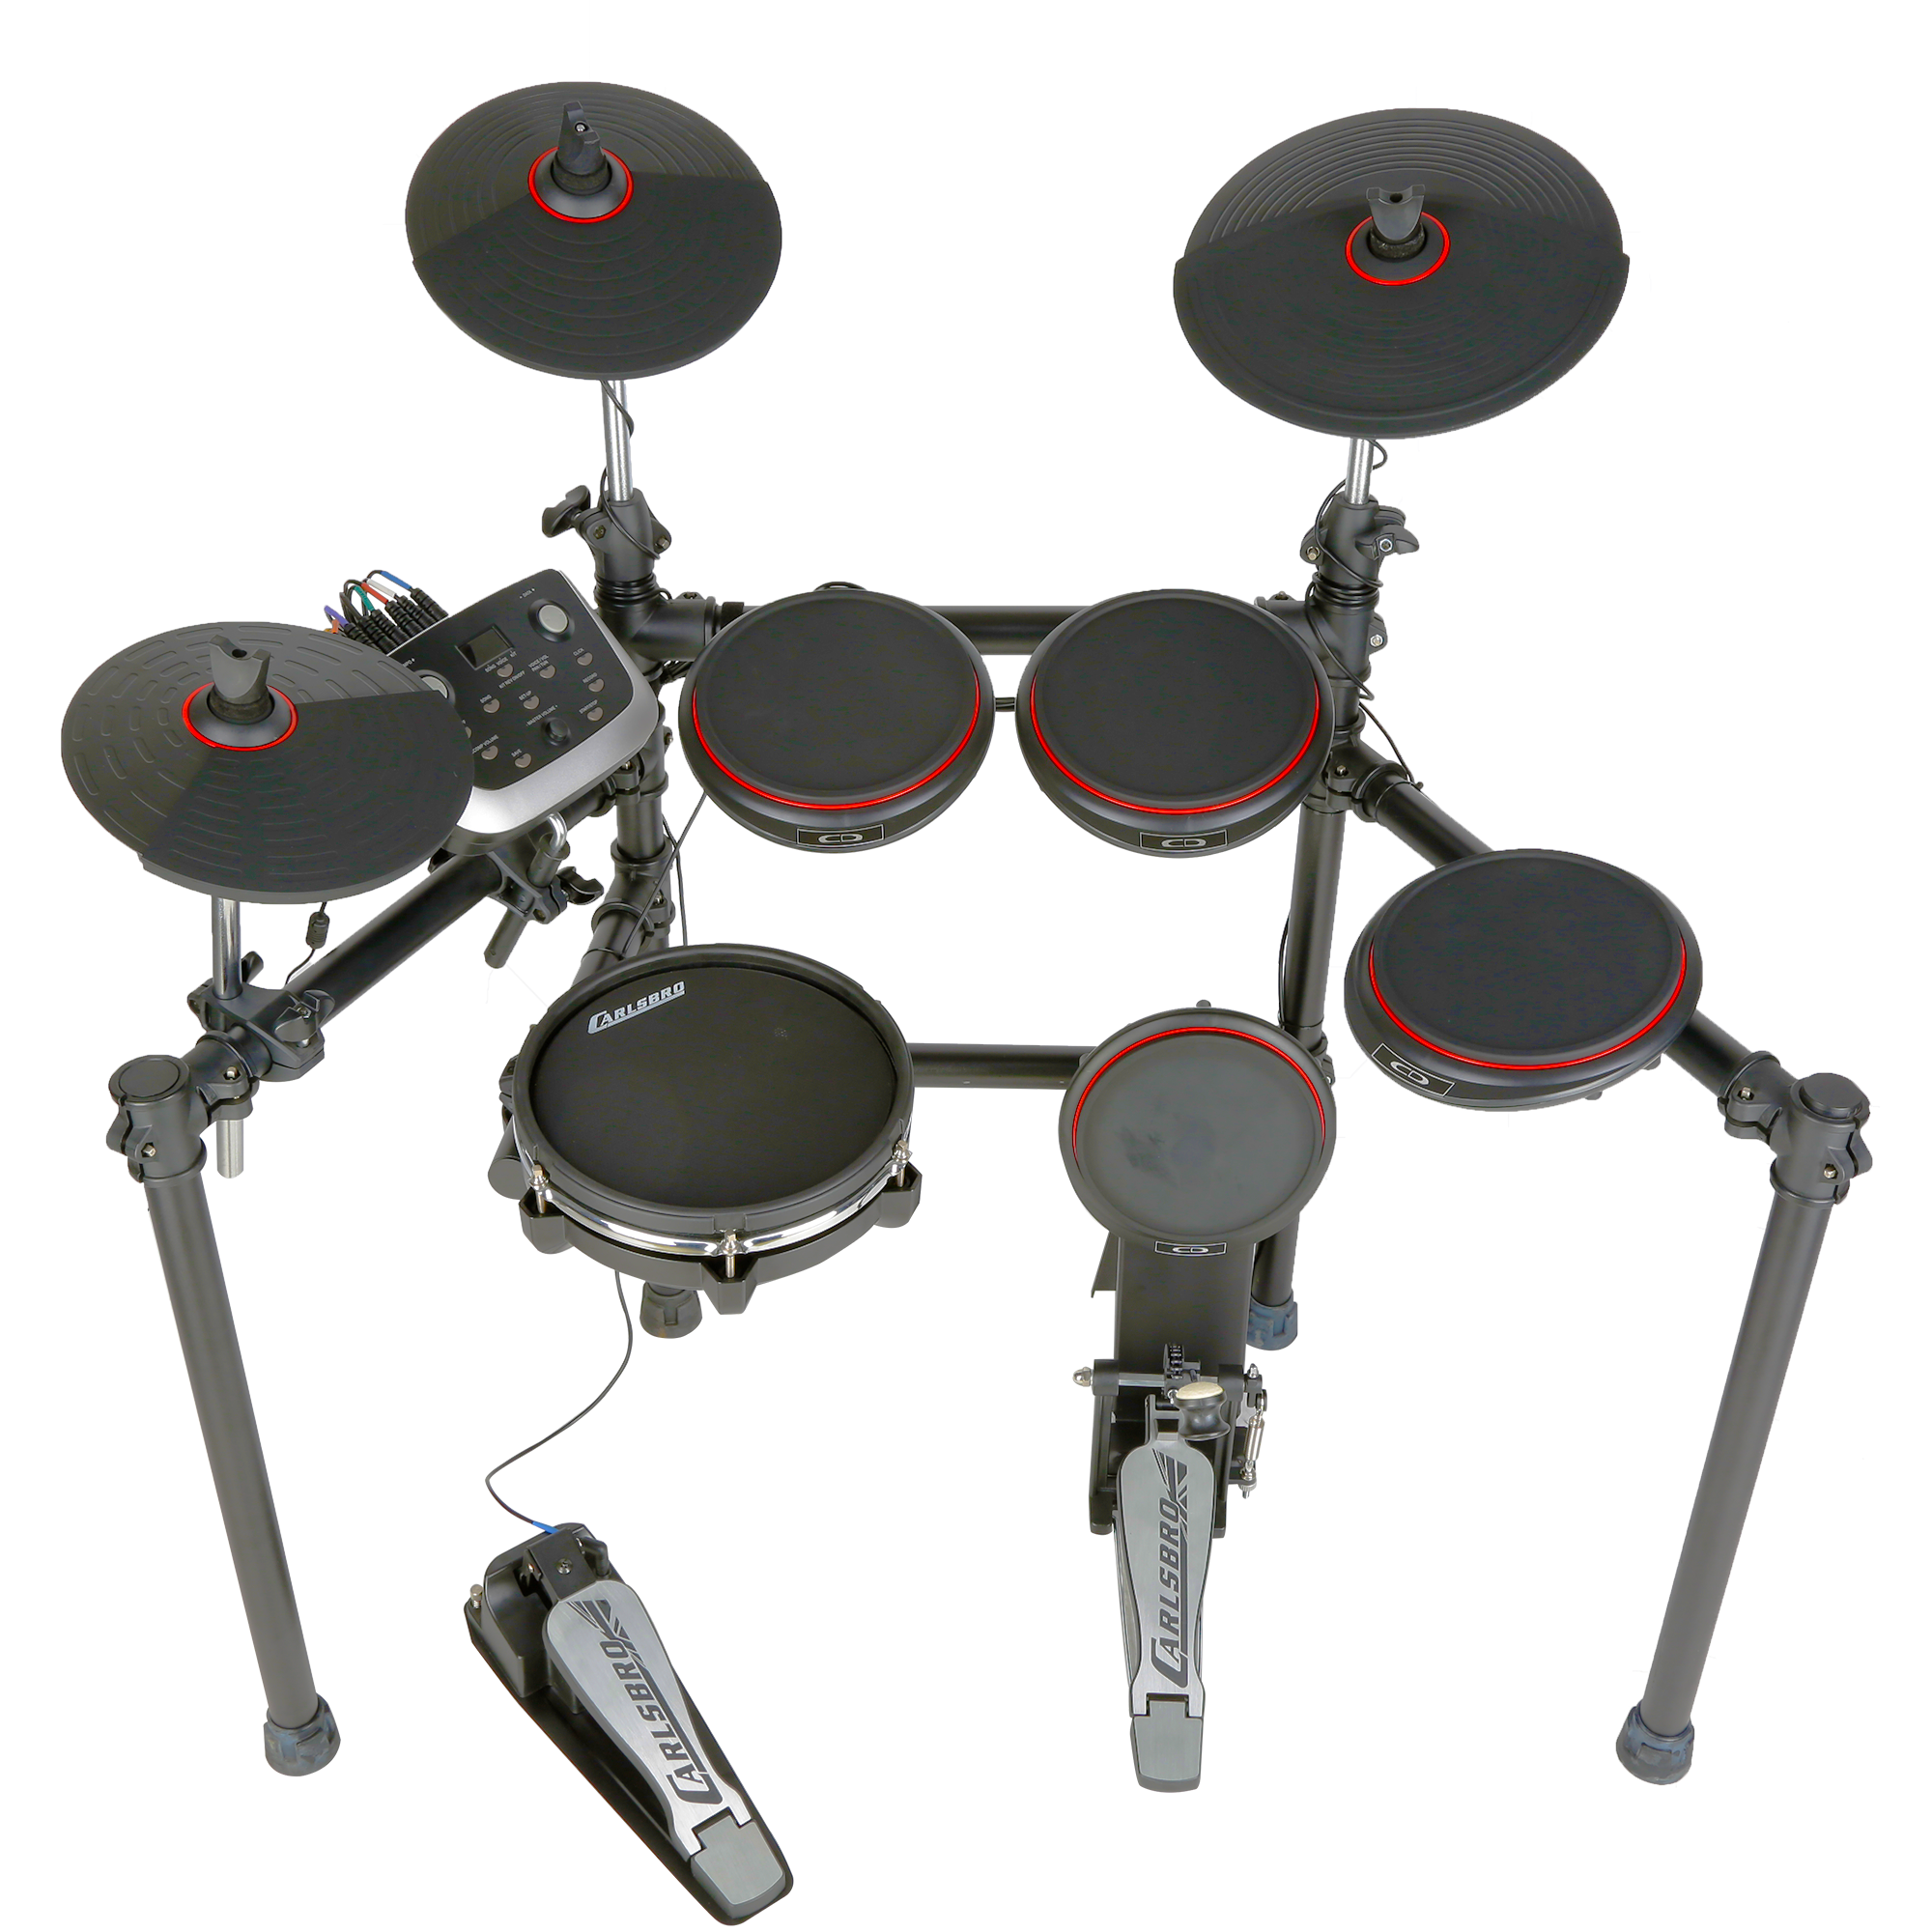 CARLSBRO CSD110-M 8 Piece Electronic Drum Kit